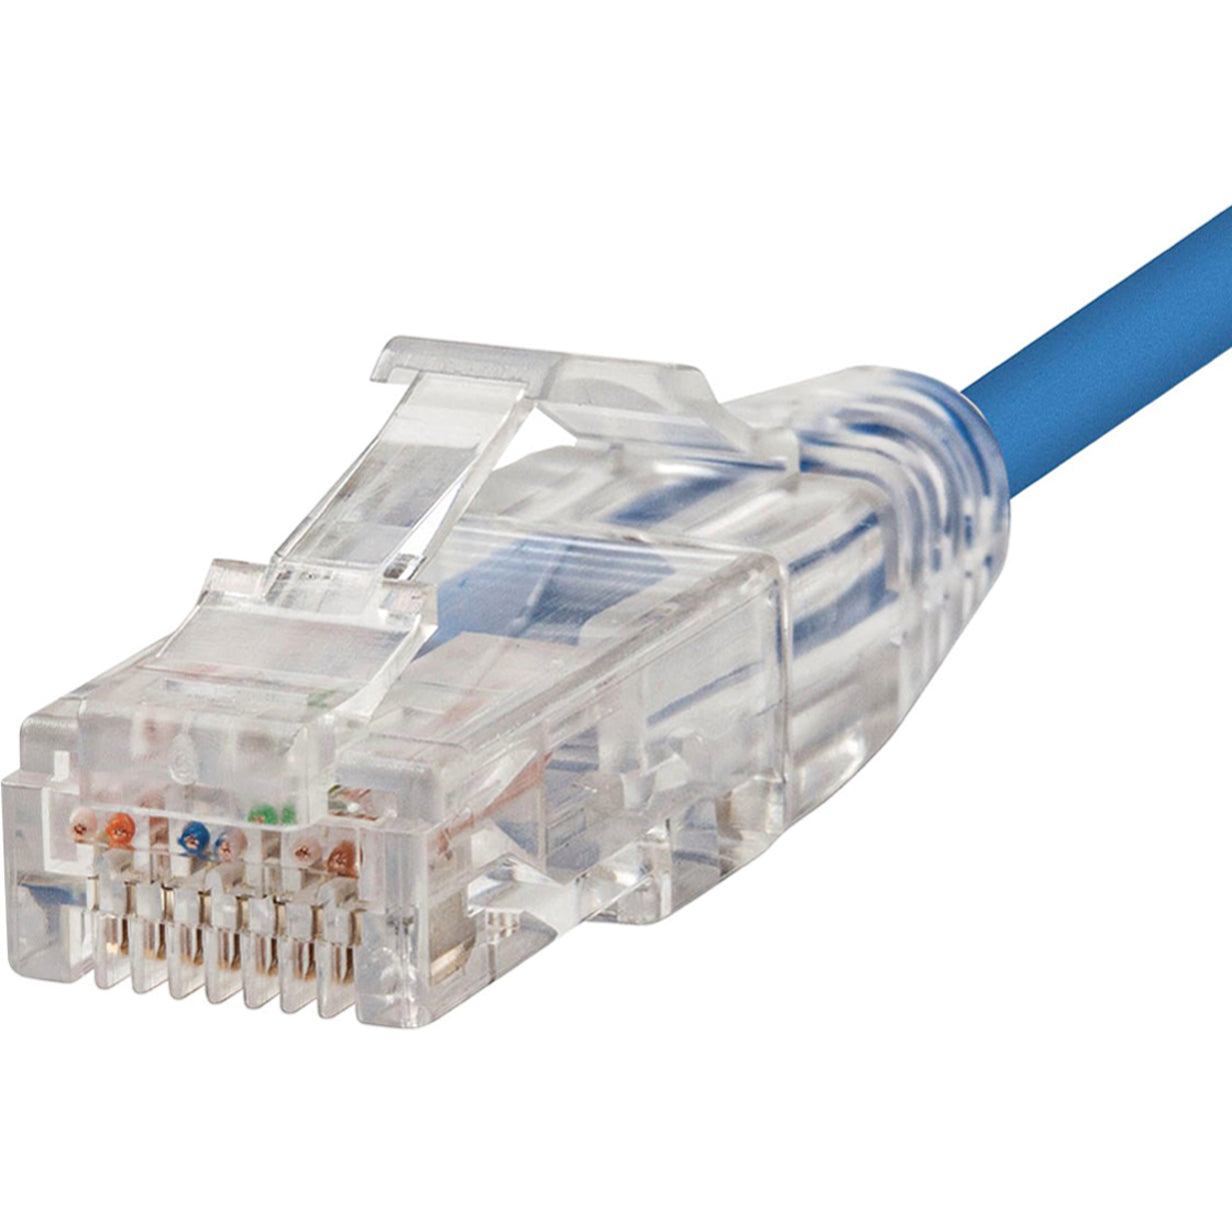 Monoprice 13538 SlimRun Cat6 28AWG UTP Ethernet Network Cable, 7ft Blue, Flexible, Snagless